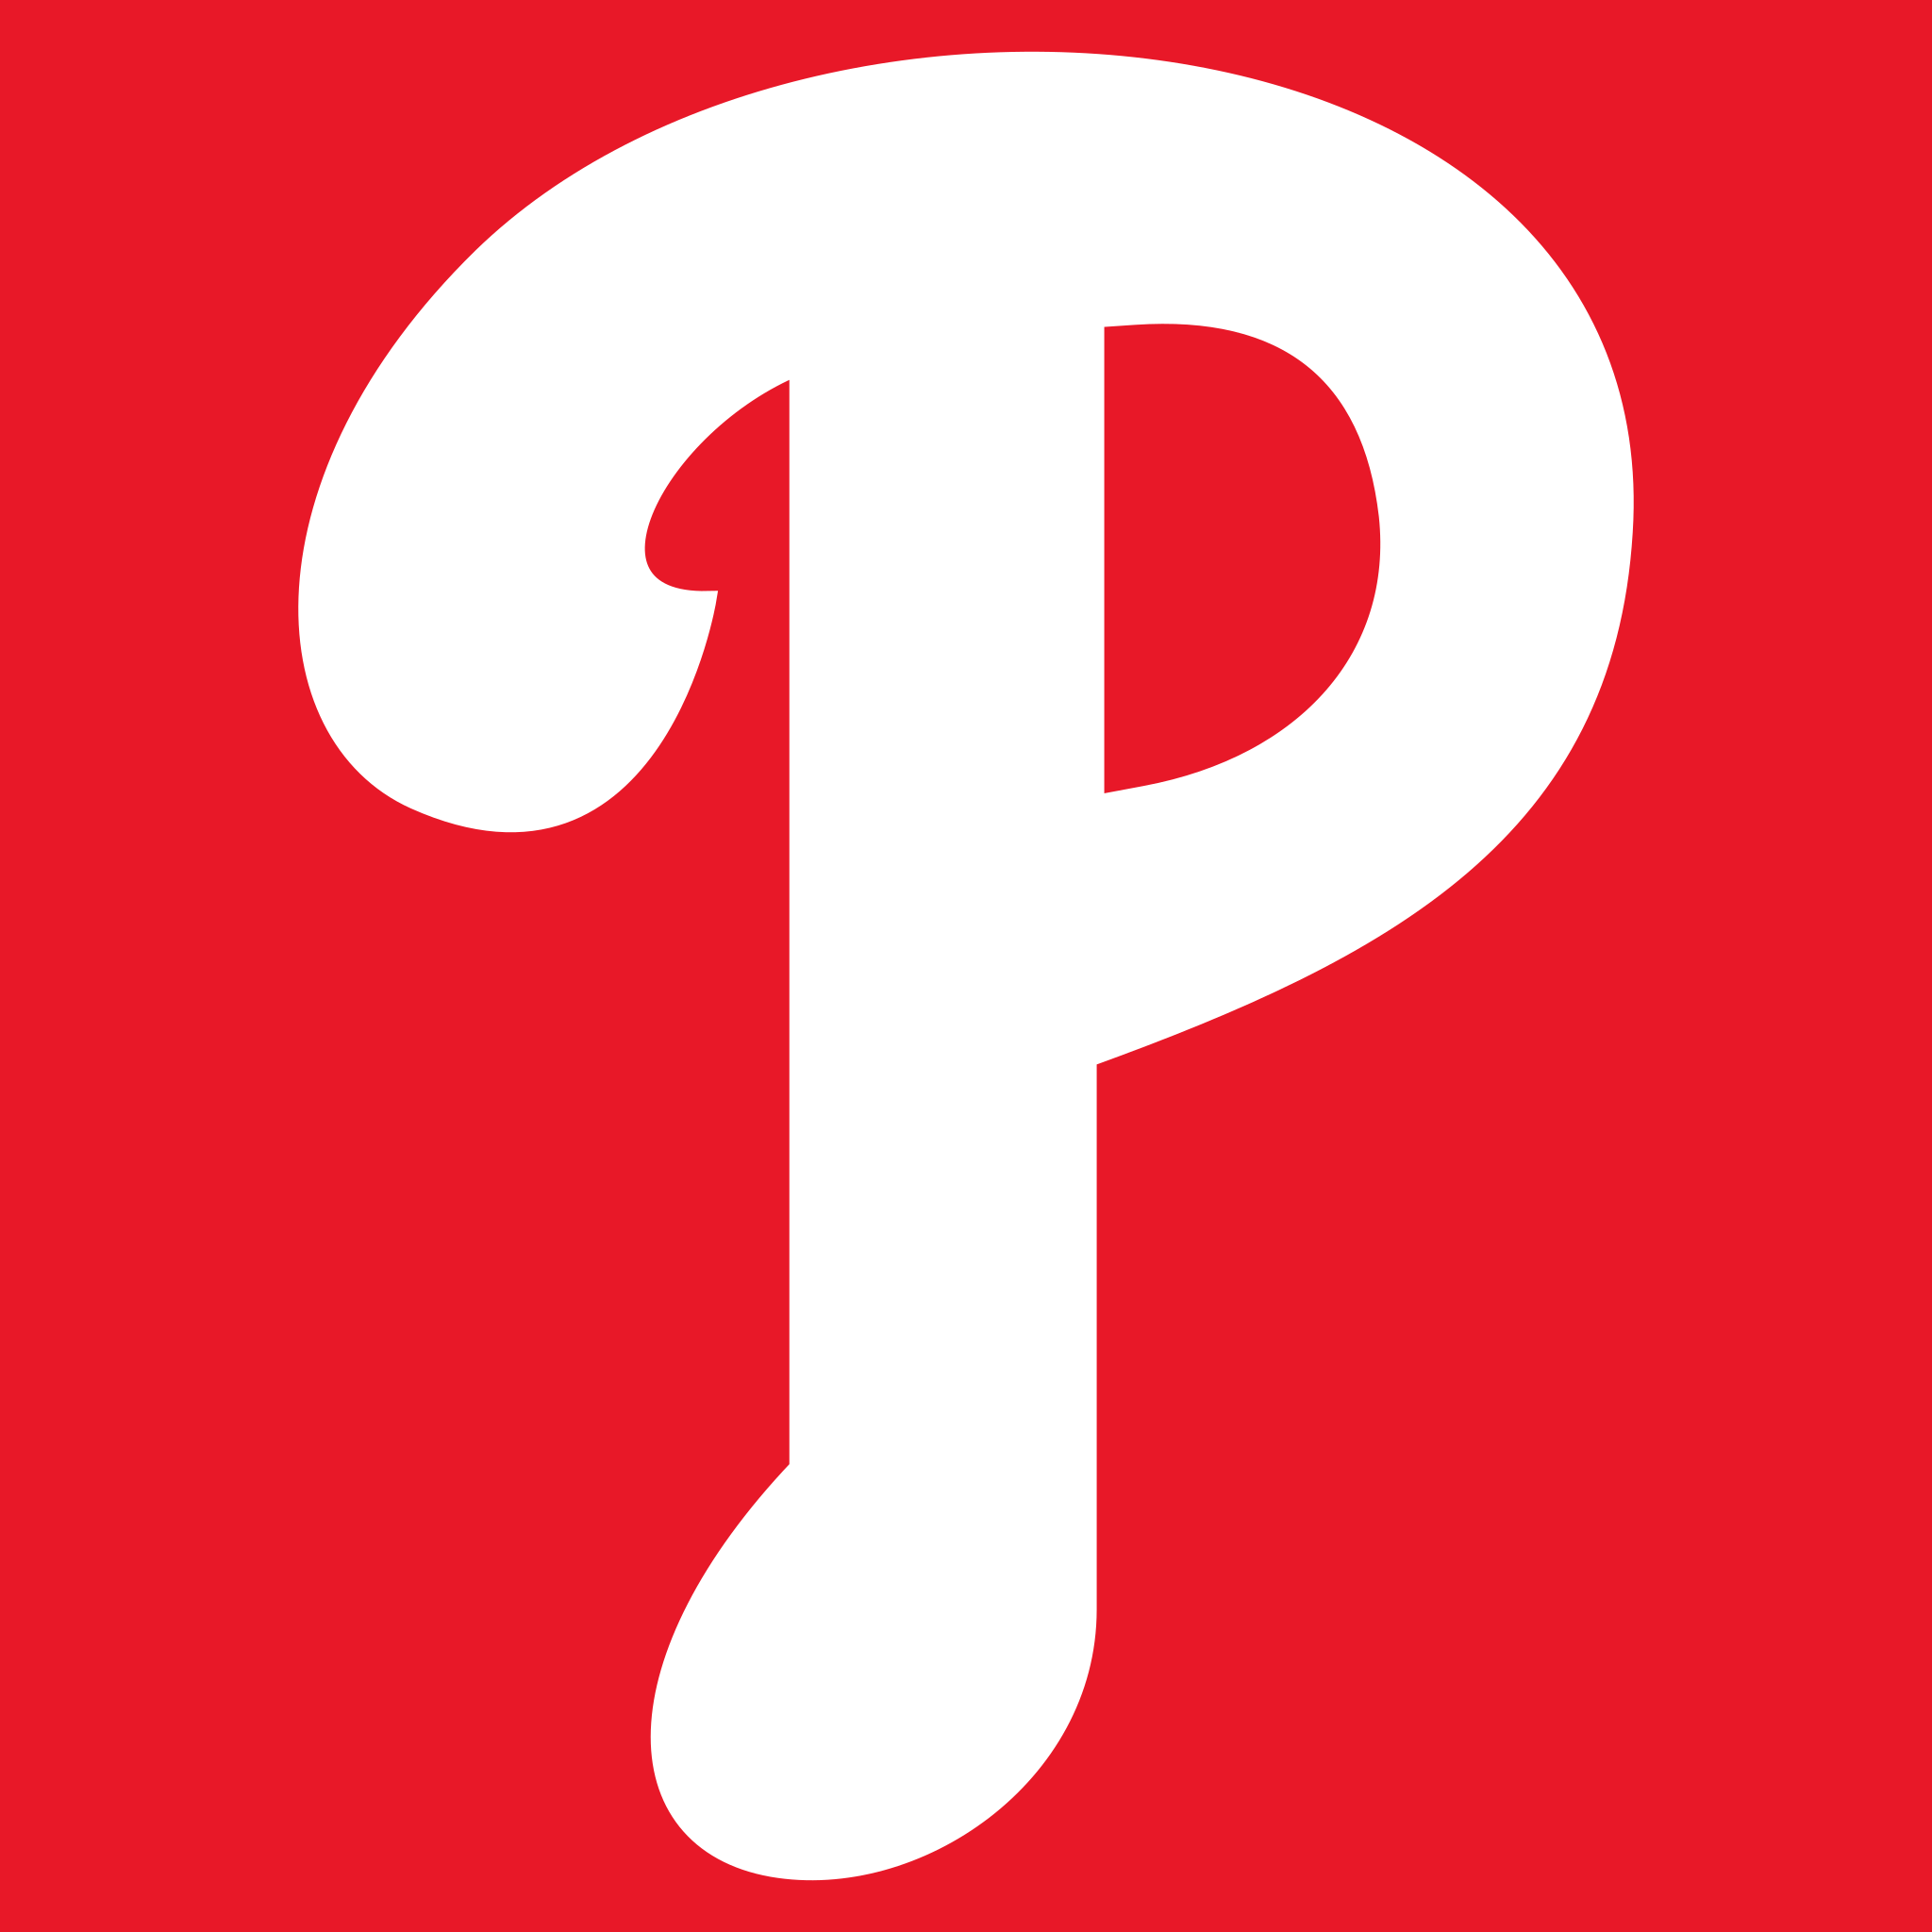 File:Boston Red Sox cap logo.svg - Wikipedia